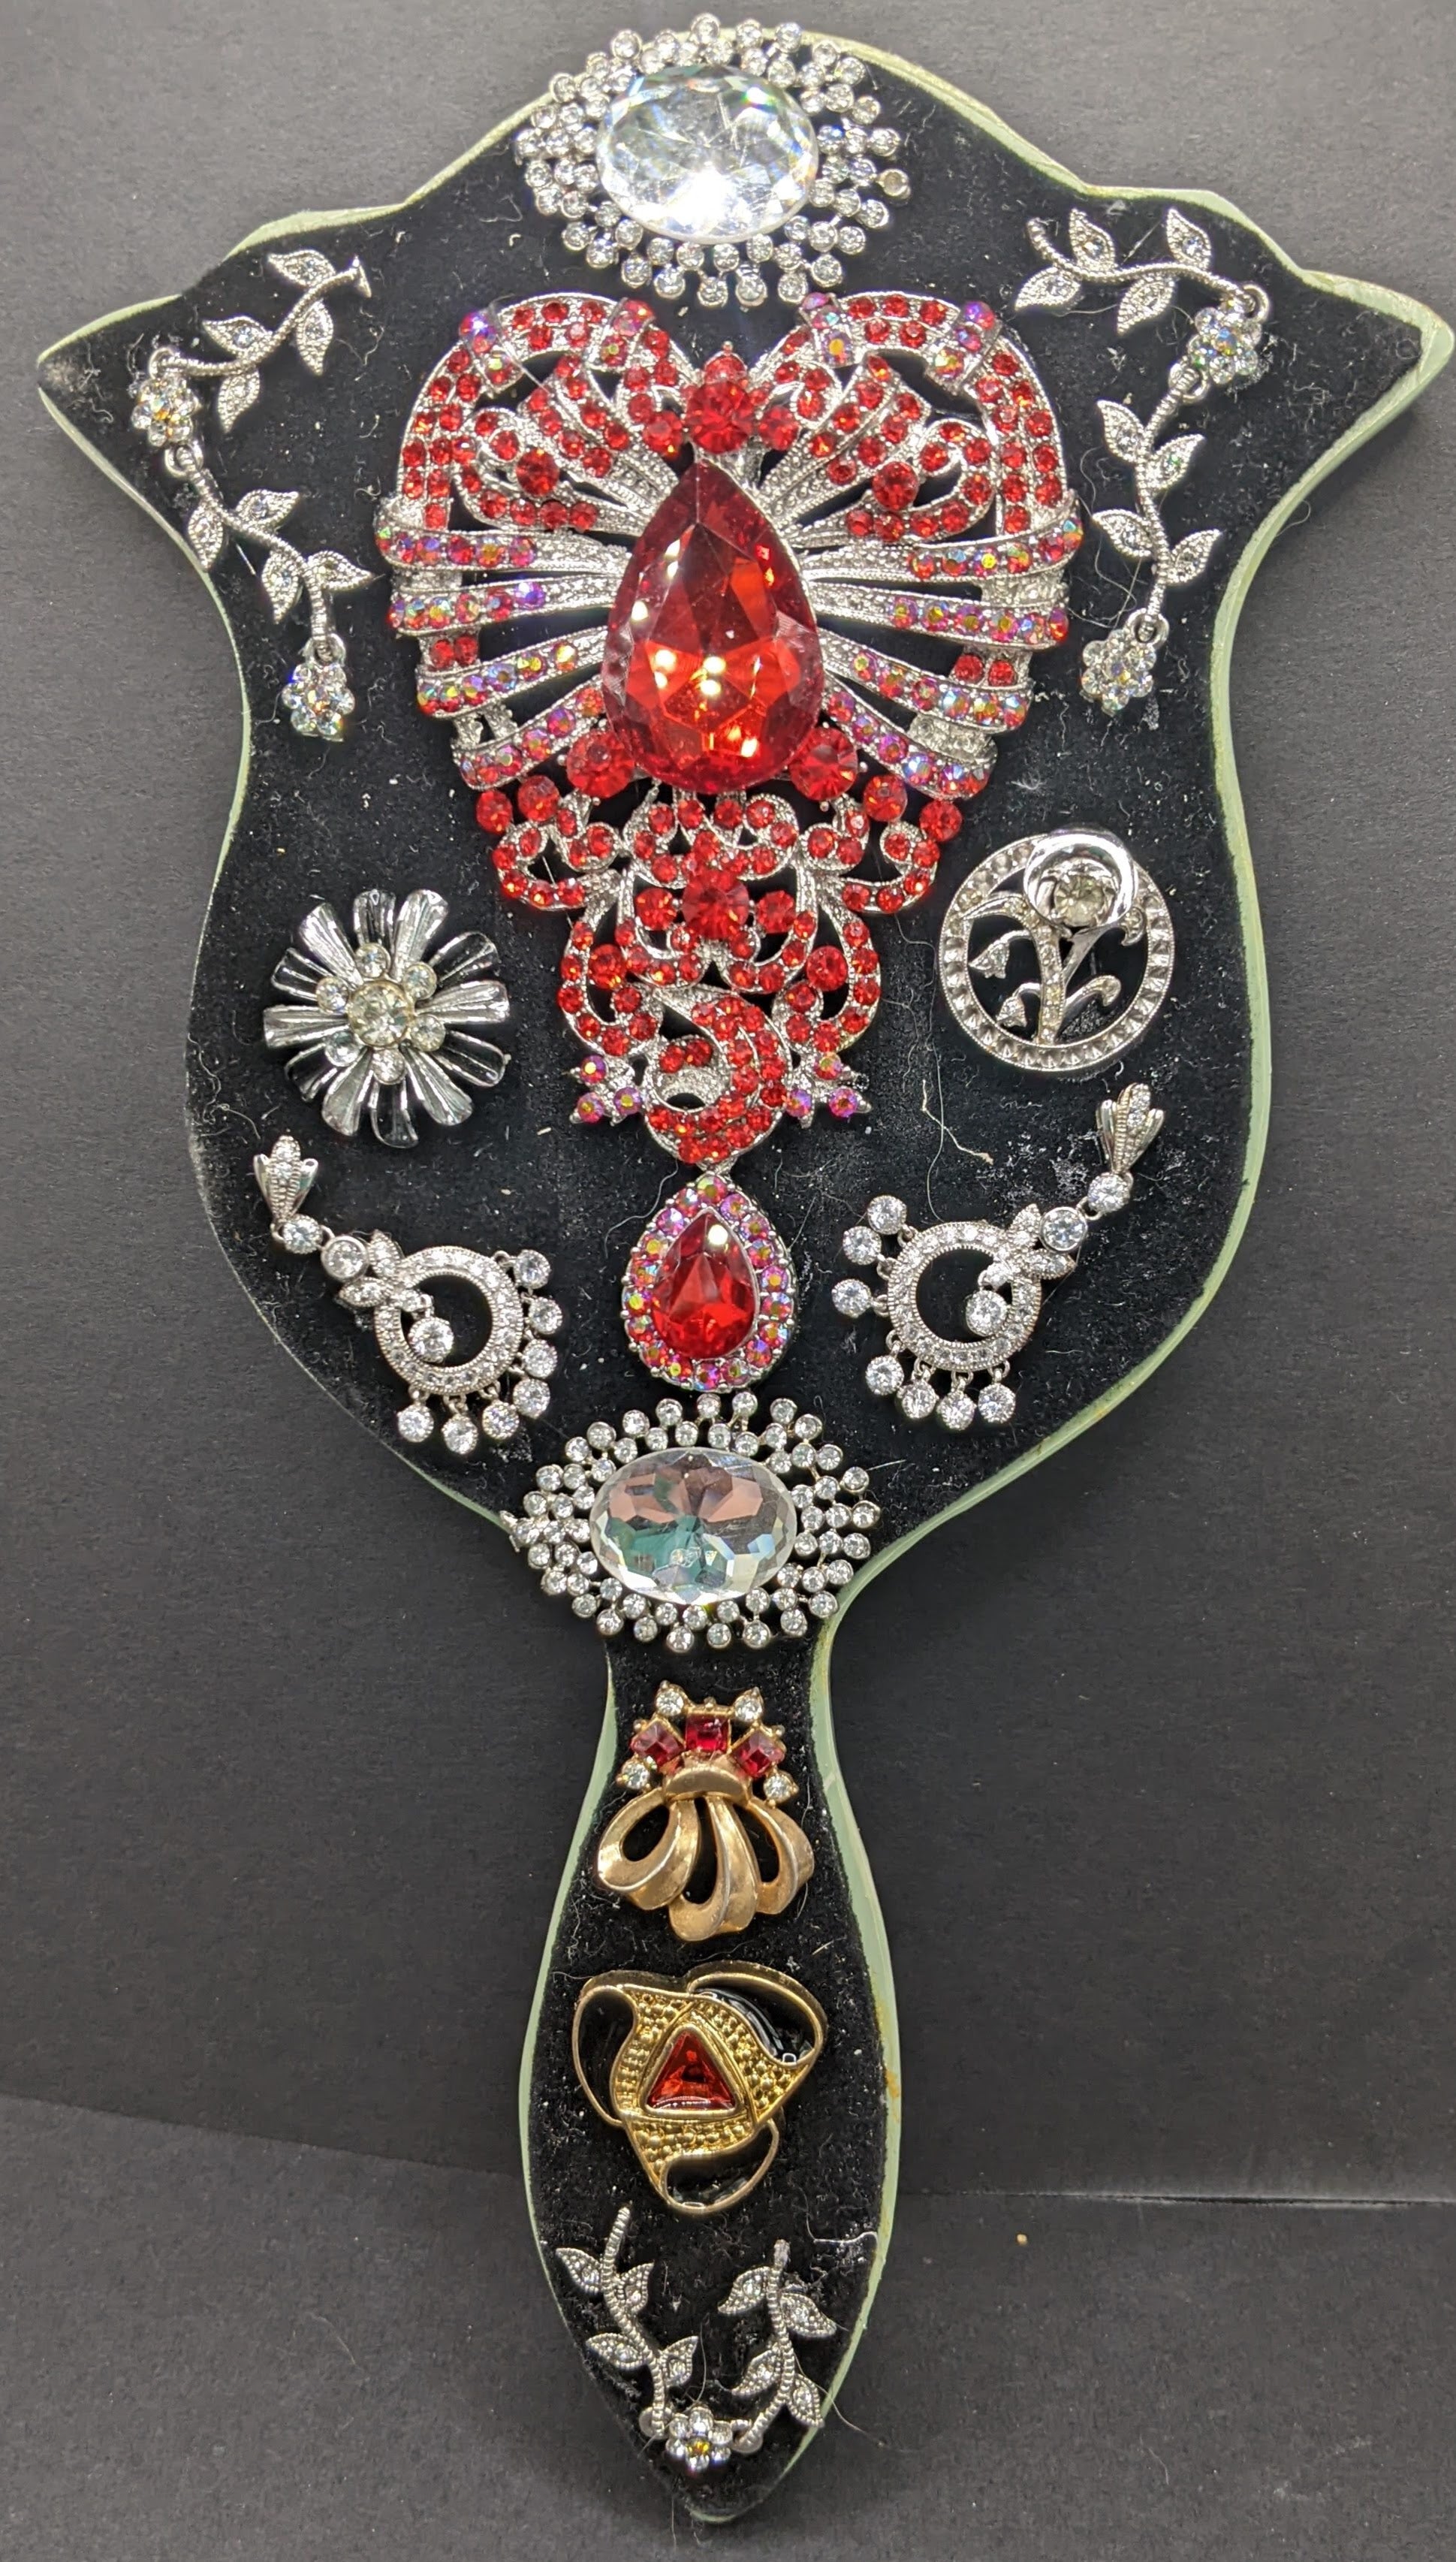 Princess hand mirror with vintage jewelry